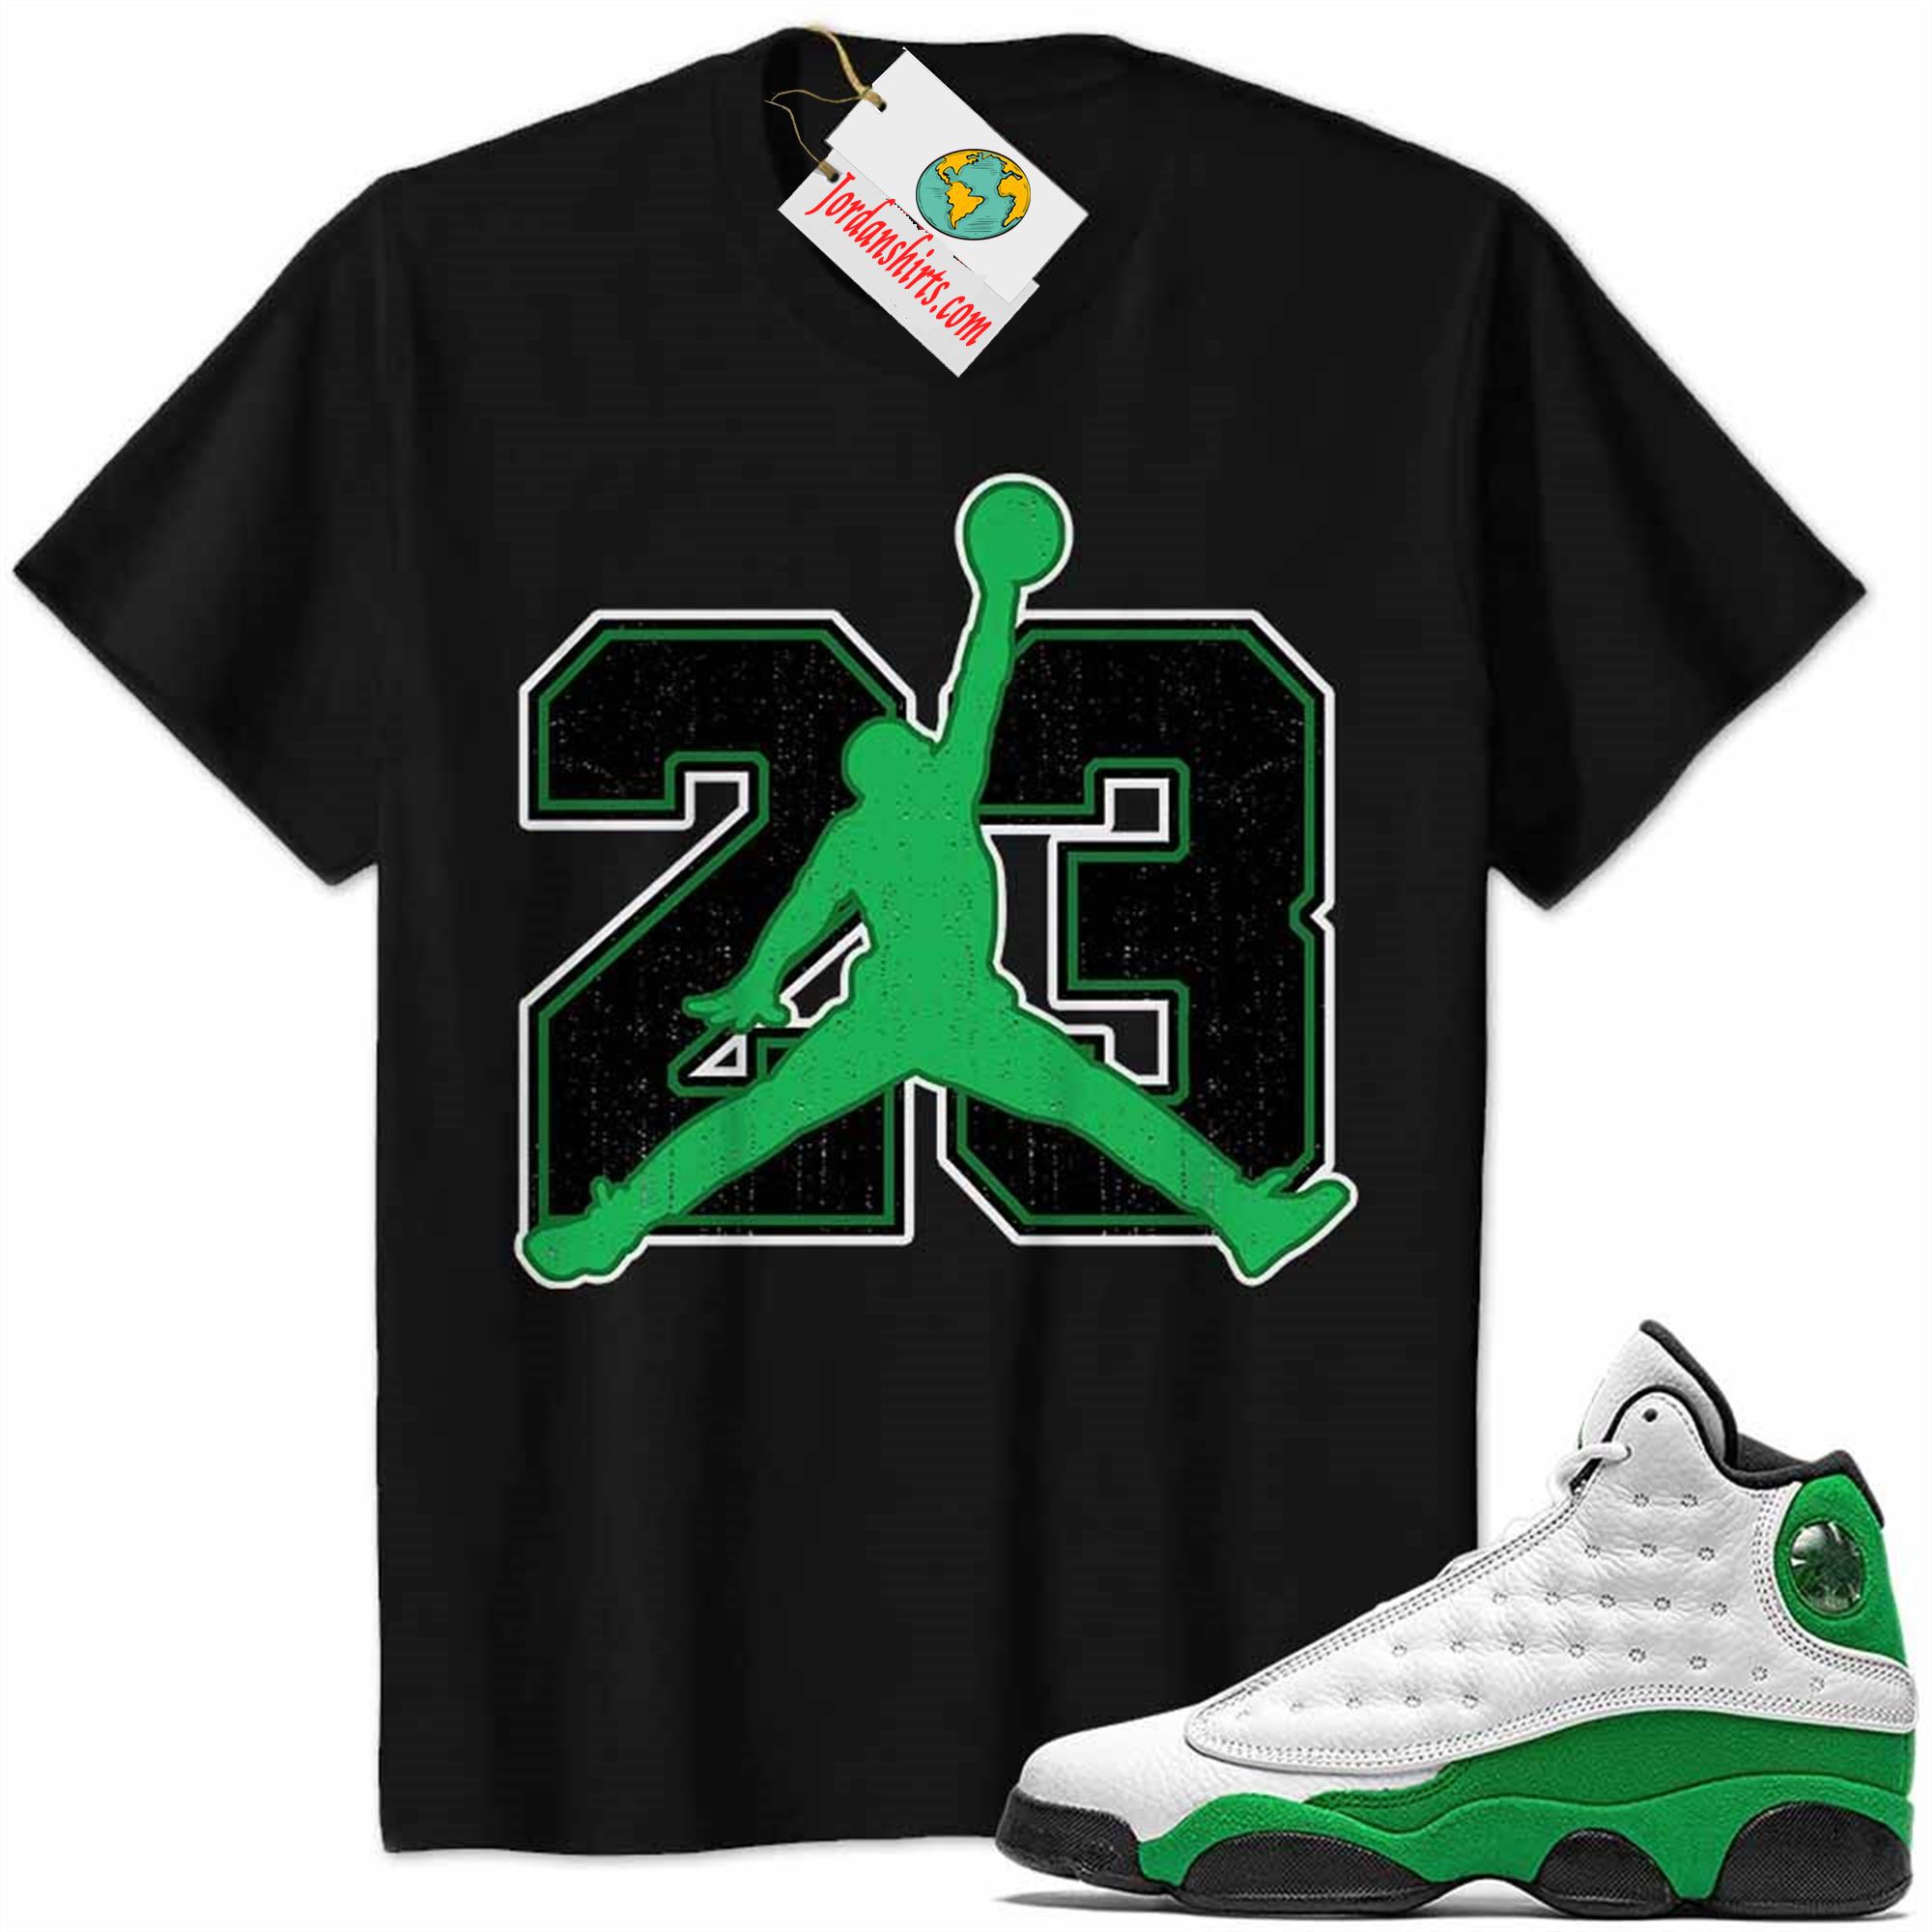 Jordan 13 Shirt, Jordan 13 Lucky Green Shirt Jumpman No23 Black Full Size Up To 5xl